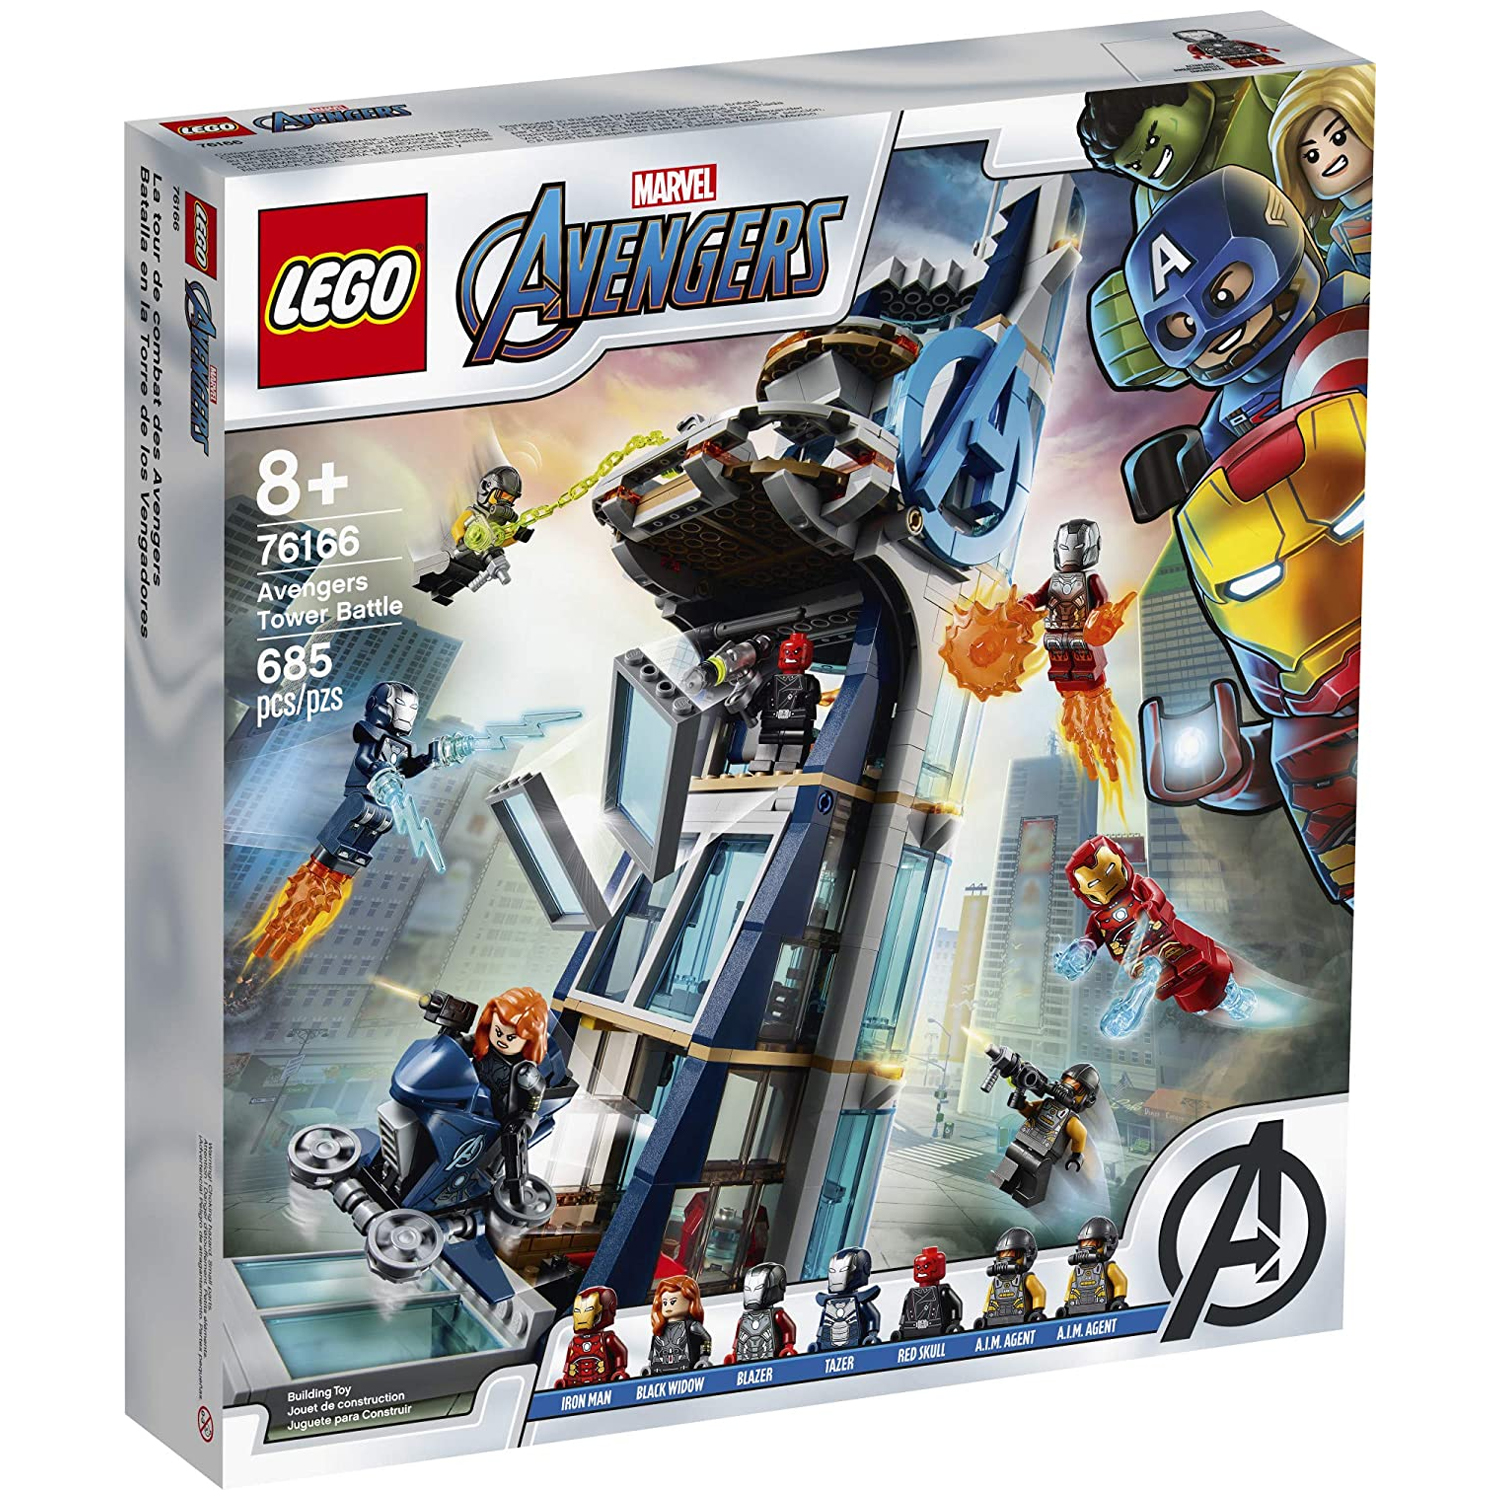 lego-marvel-76166-avengers-tower-battle-5-level-building-set-with-7-minifigures-673419330428-ebay